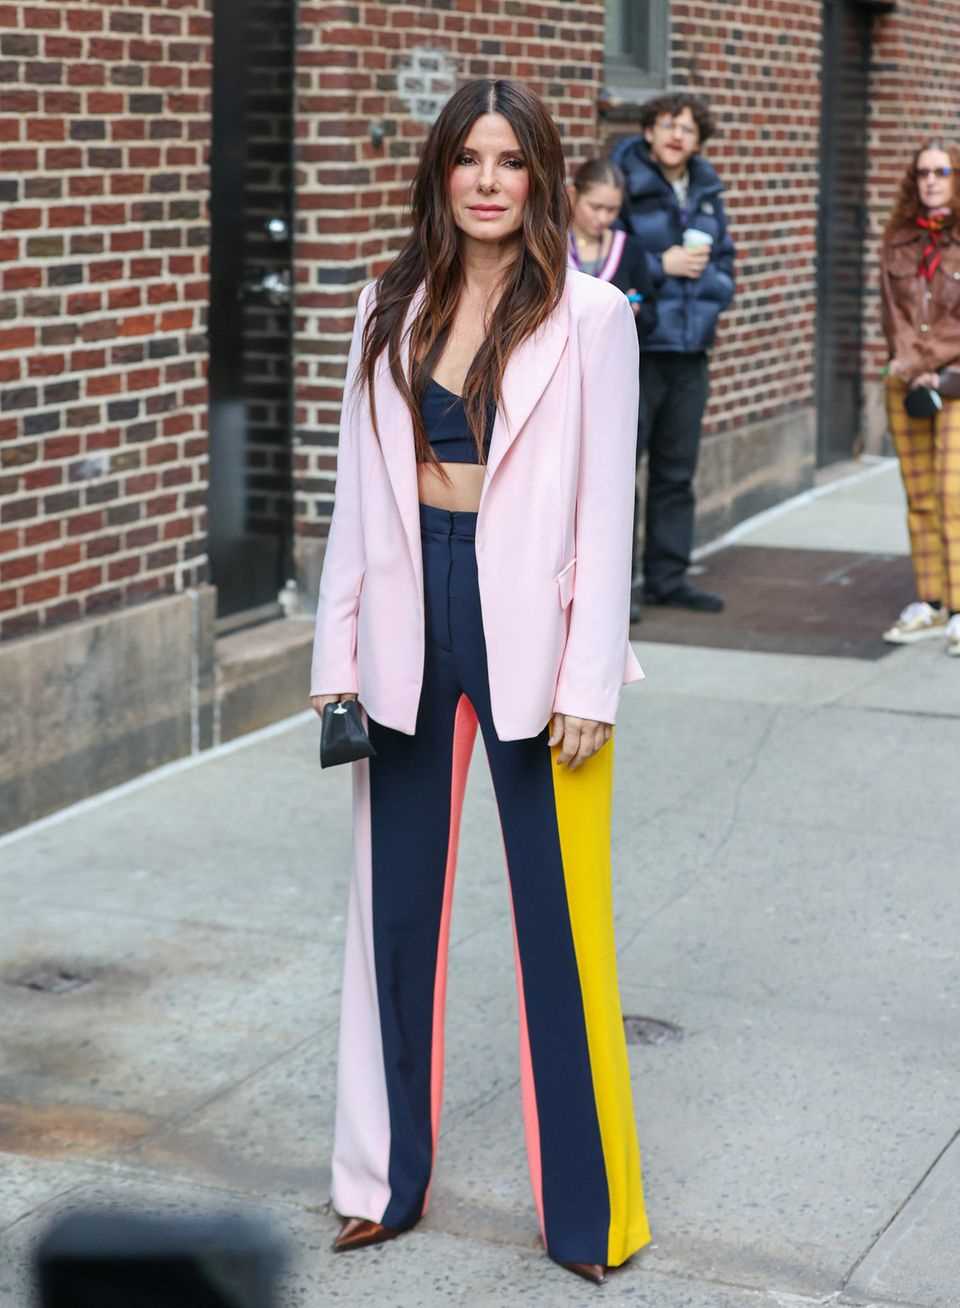 Sandra Bullock inspires in New York with the trendy trend combination.